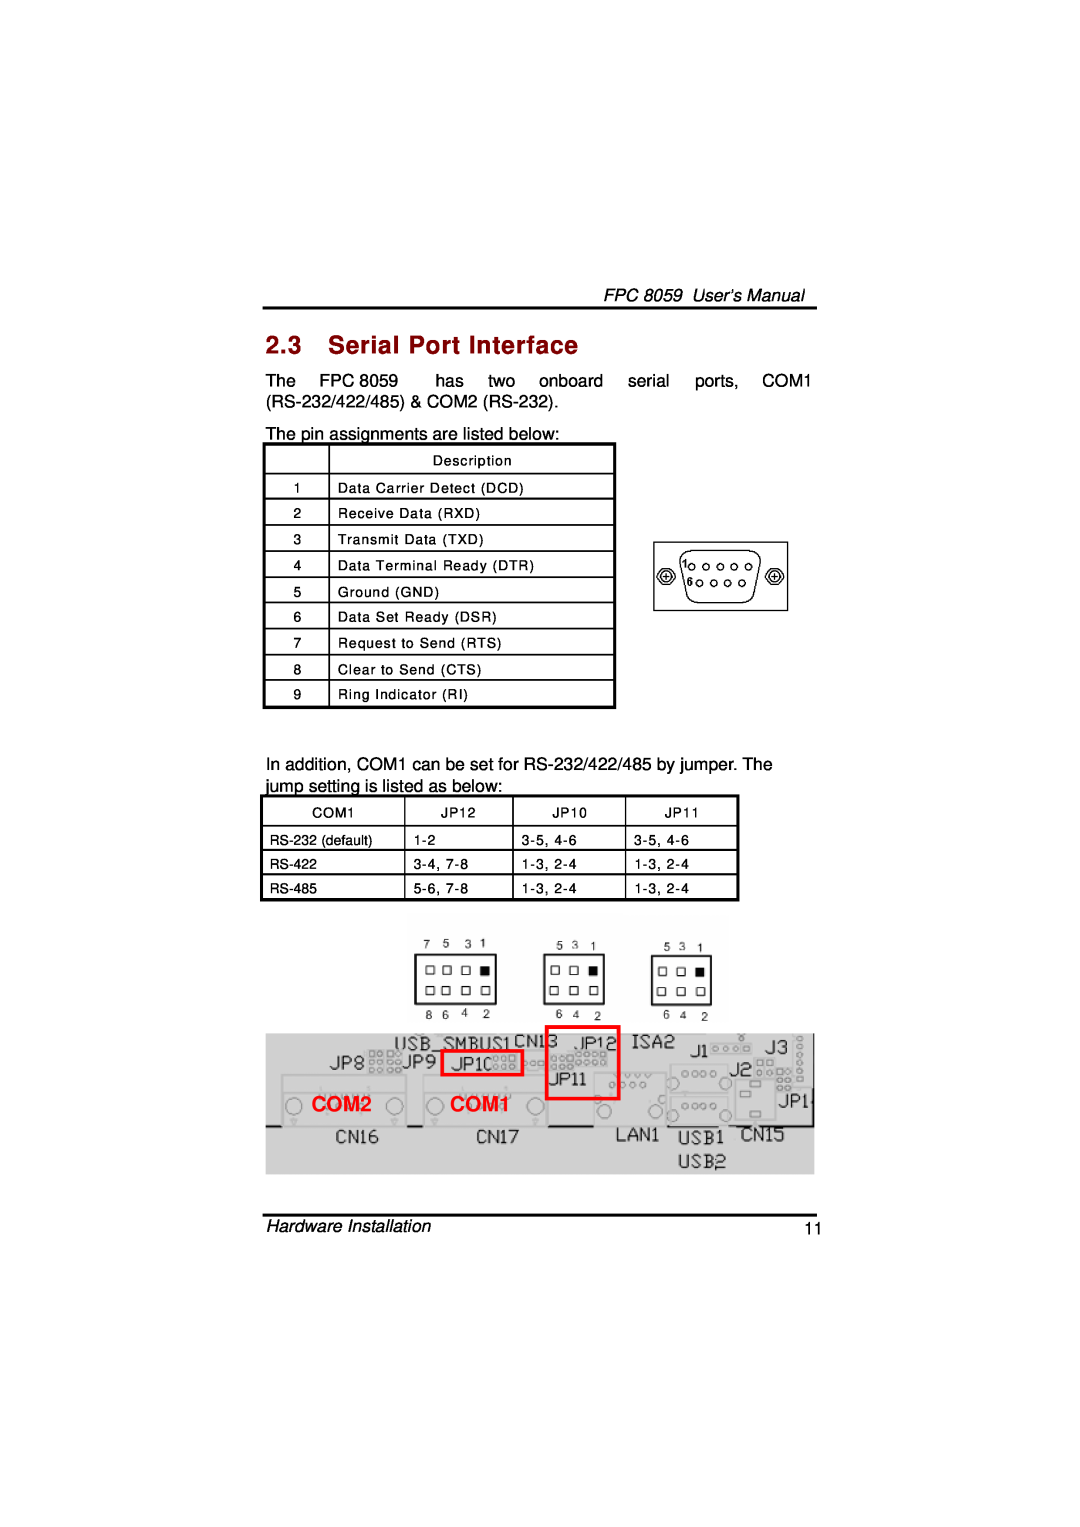 Acnodes user manual Serial Port Interface, COM2 COM1, FPC 8059 User’s Manual, Hardware Installation 